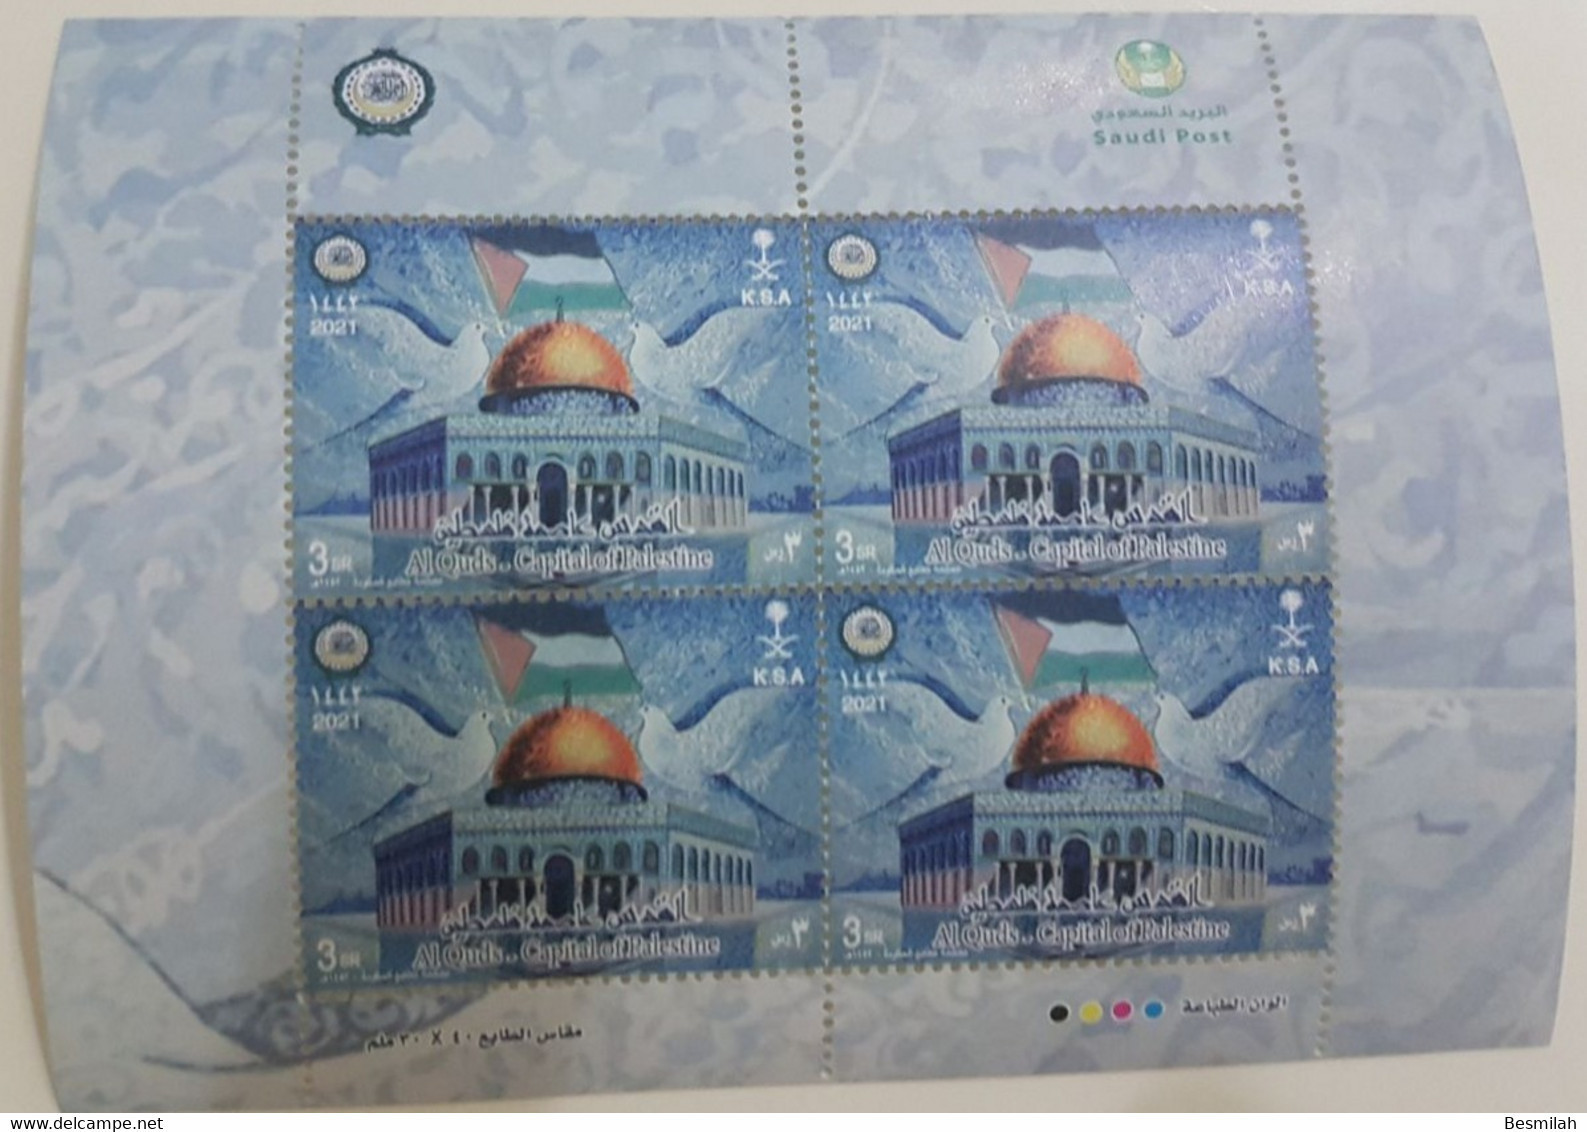 Saudi Arabia Stamp Alquds Capital Of Palestine 2021 (1442 Hijry) 4 Pieces Of 3 Riyals Plus First Day Version Cover Envel - Saudi Arabia